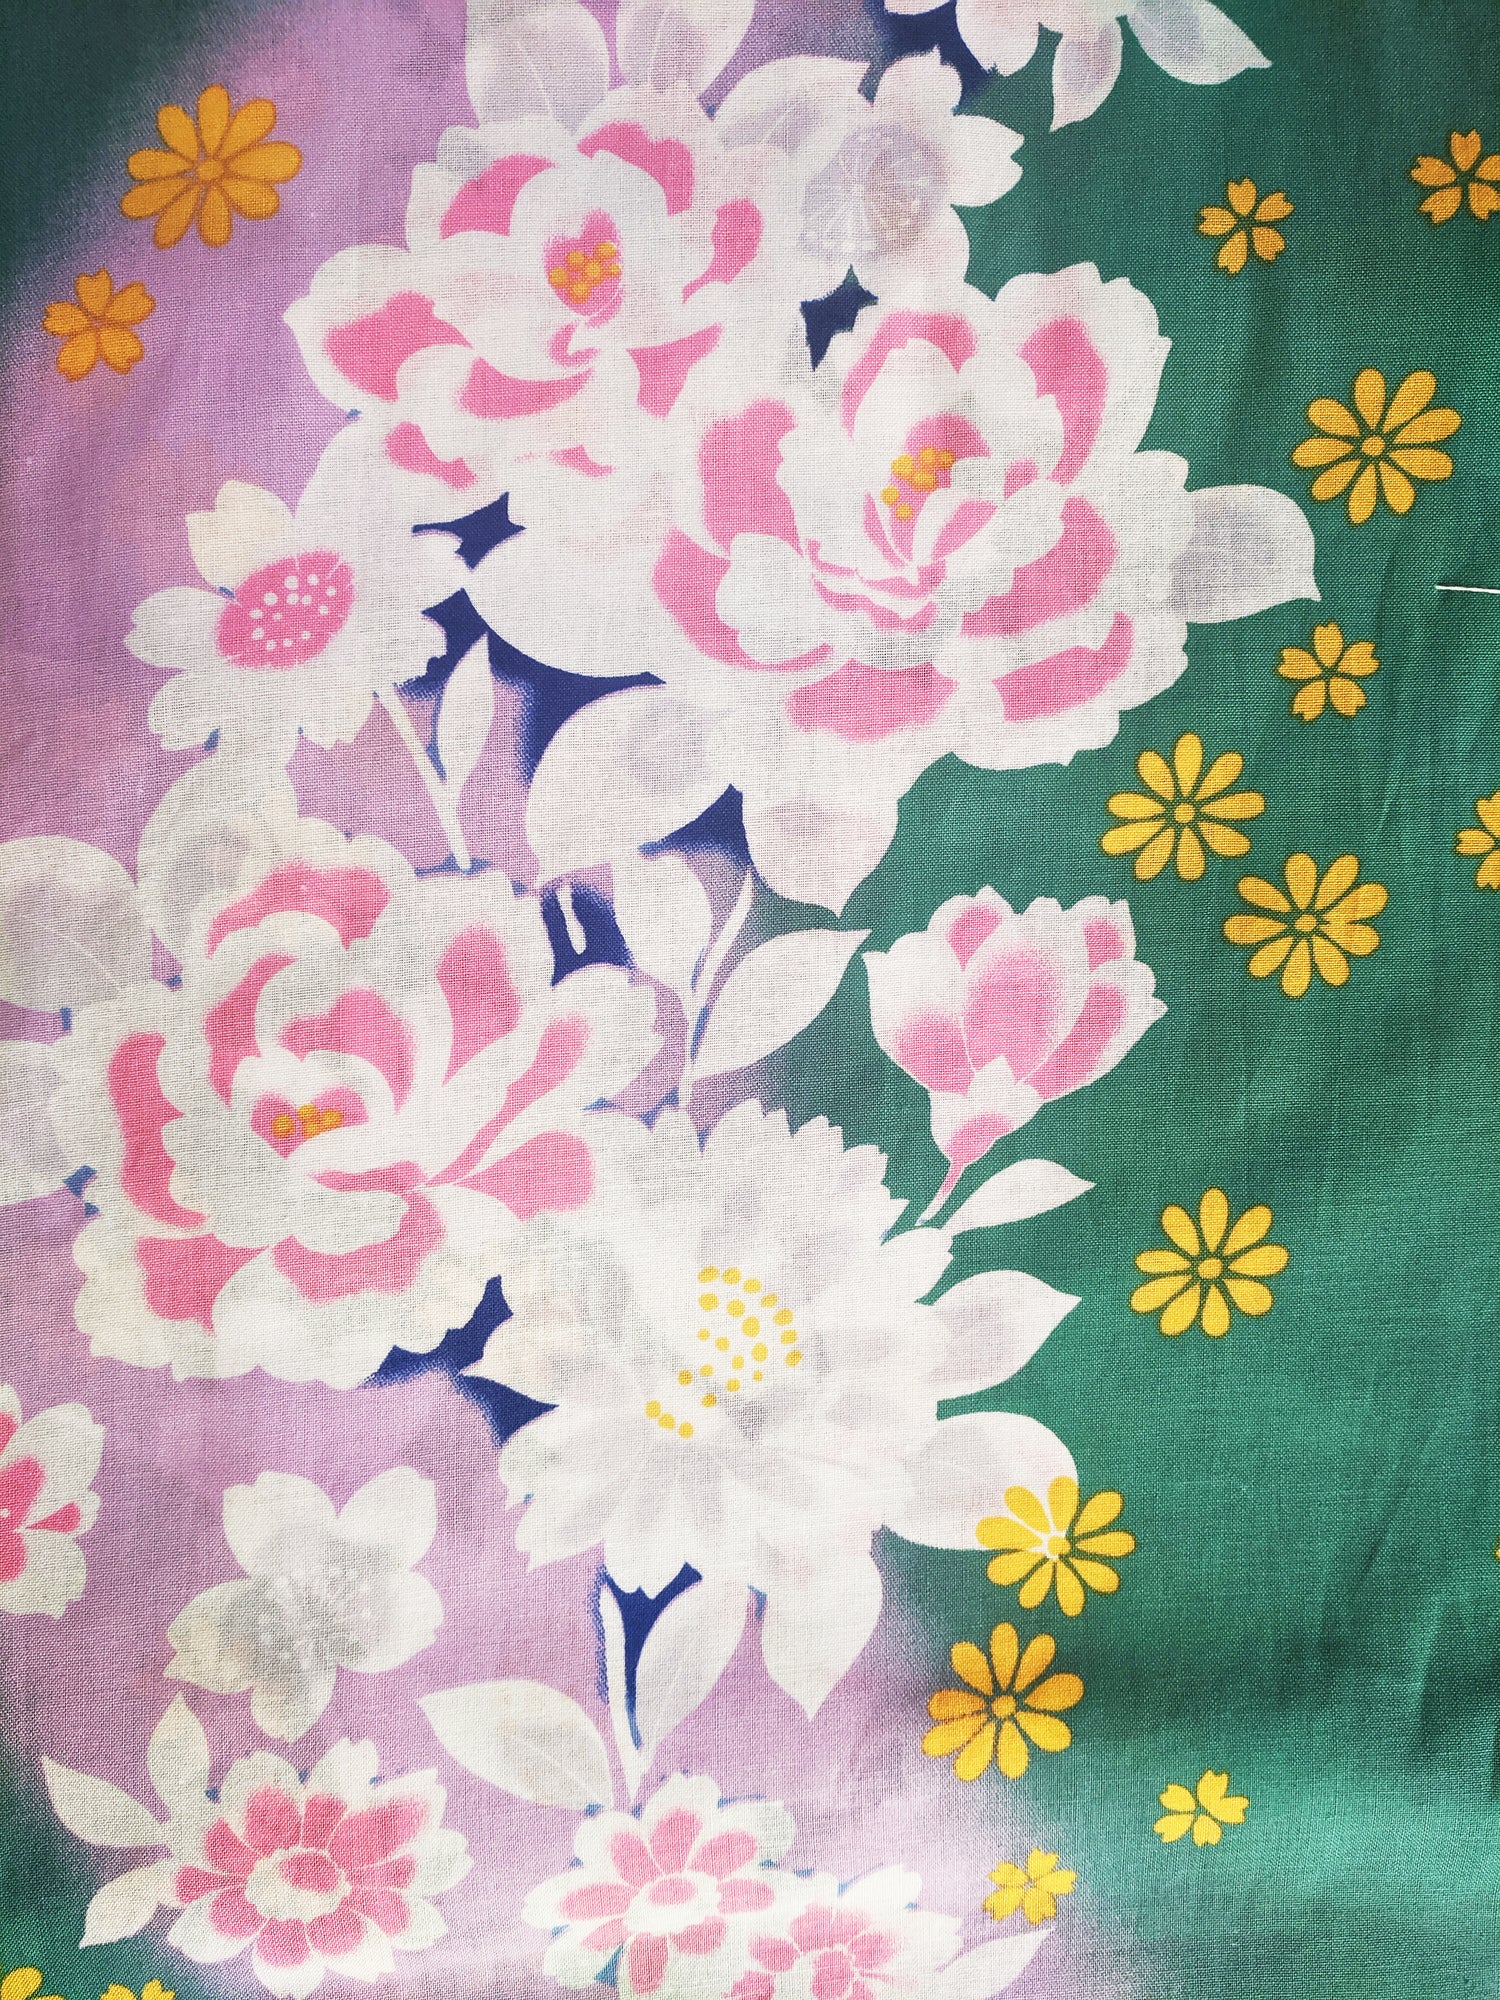 Yukata Kimono - Peony Flowers Green